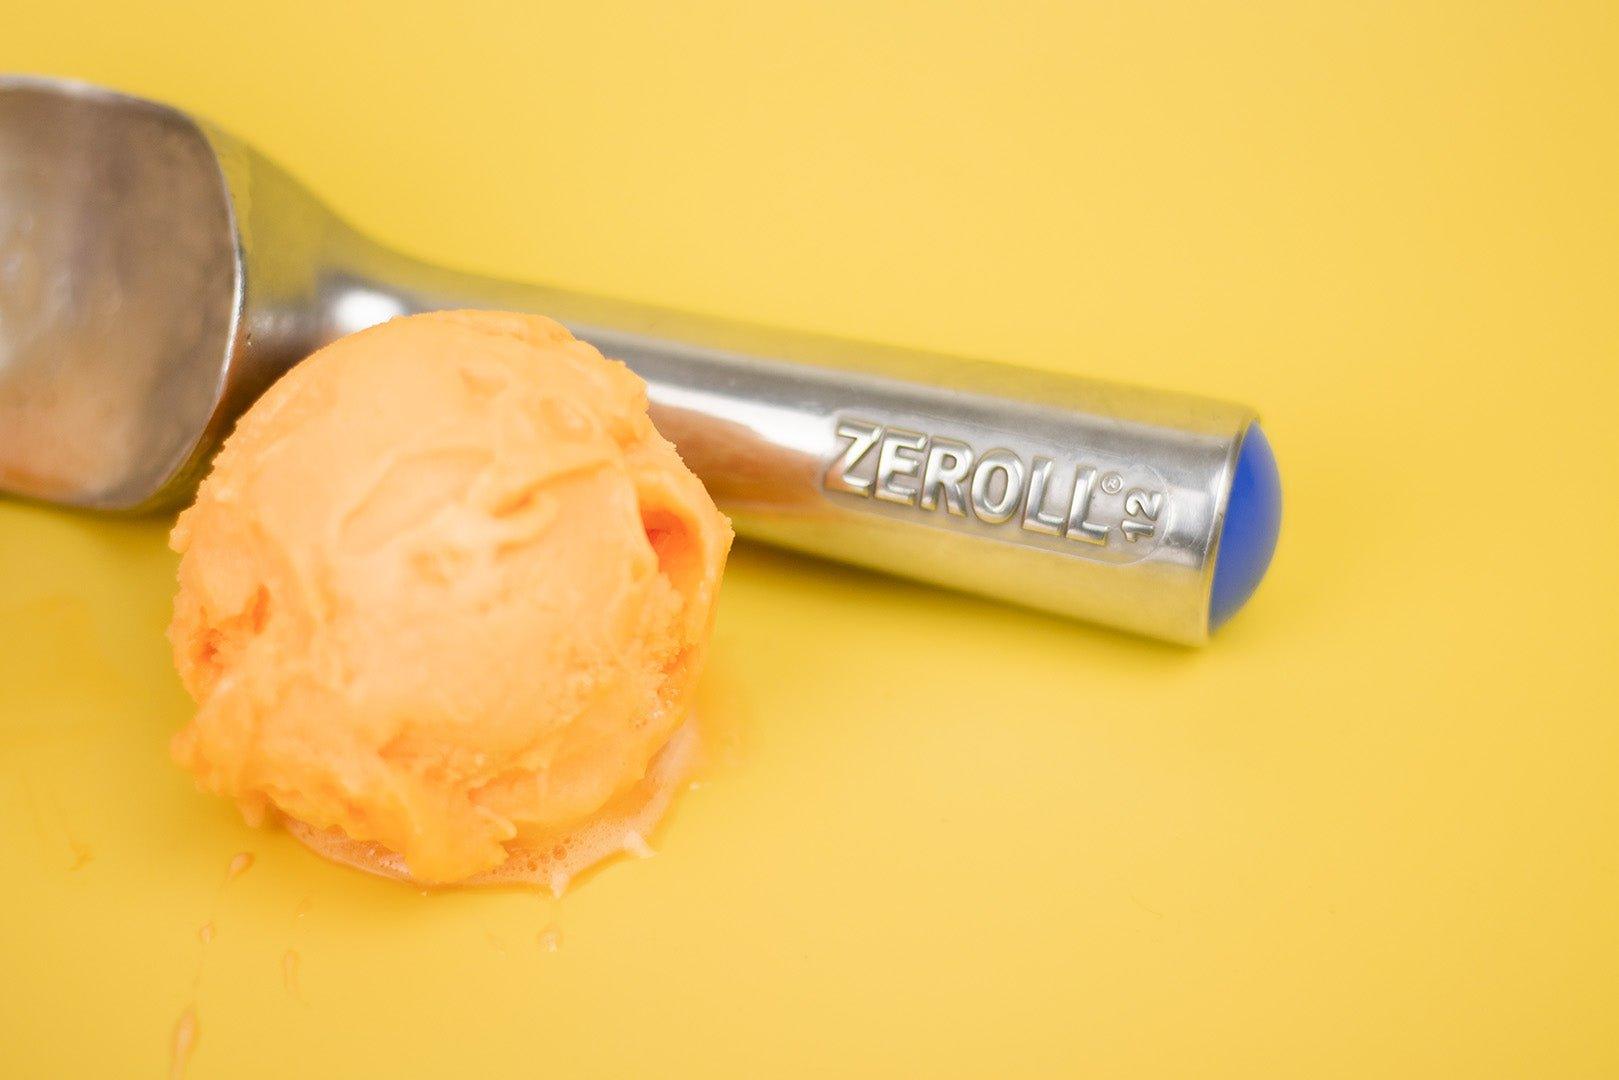 Zeroll Original Ice Cream Scoop Zerolon 3 oz